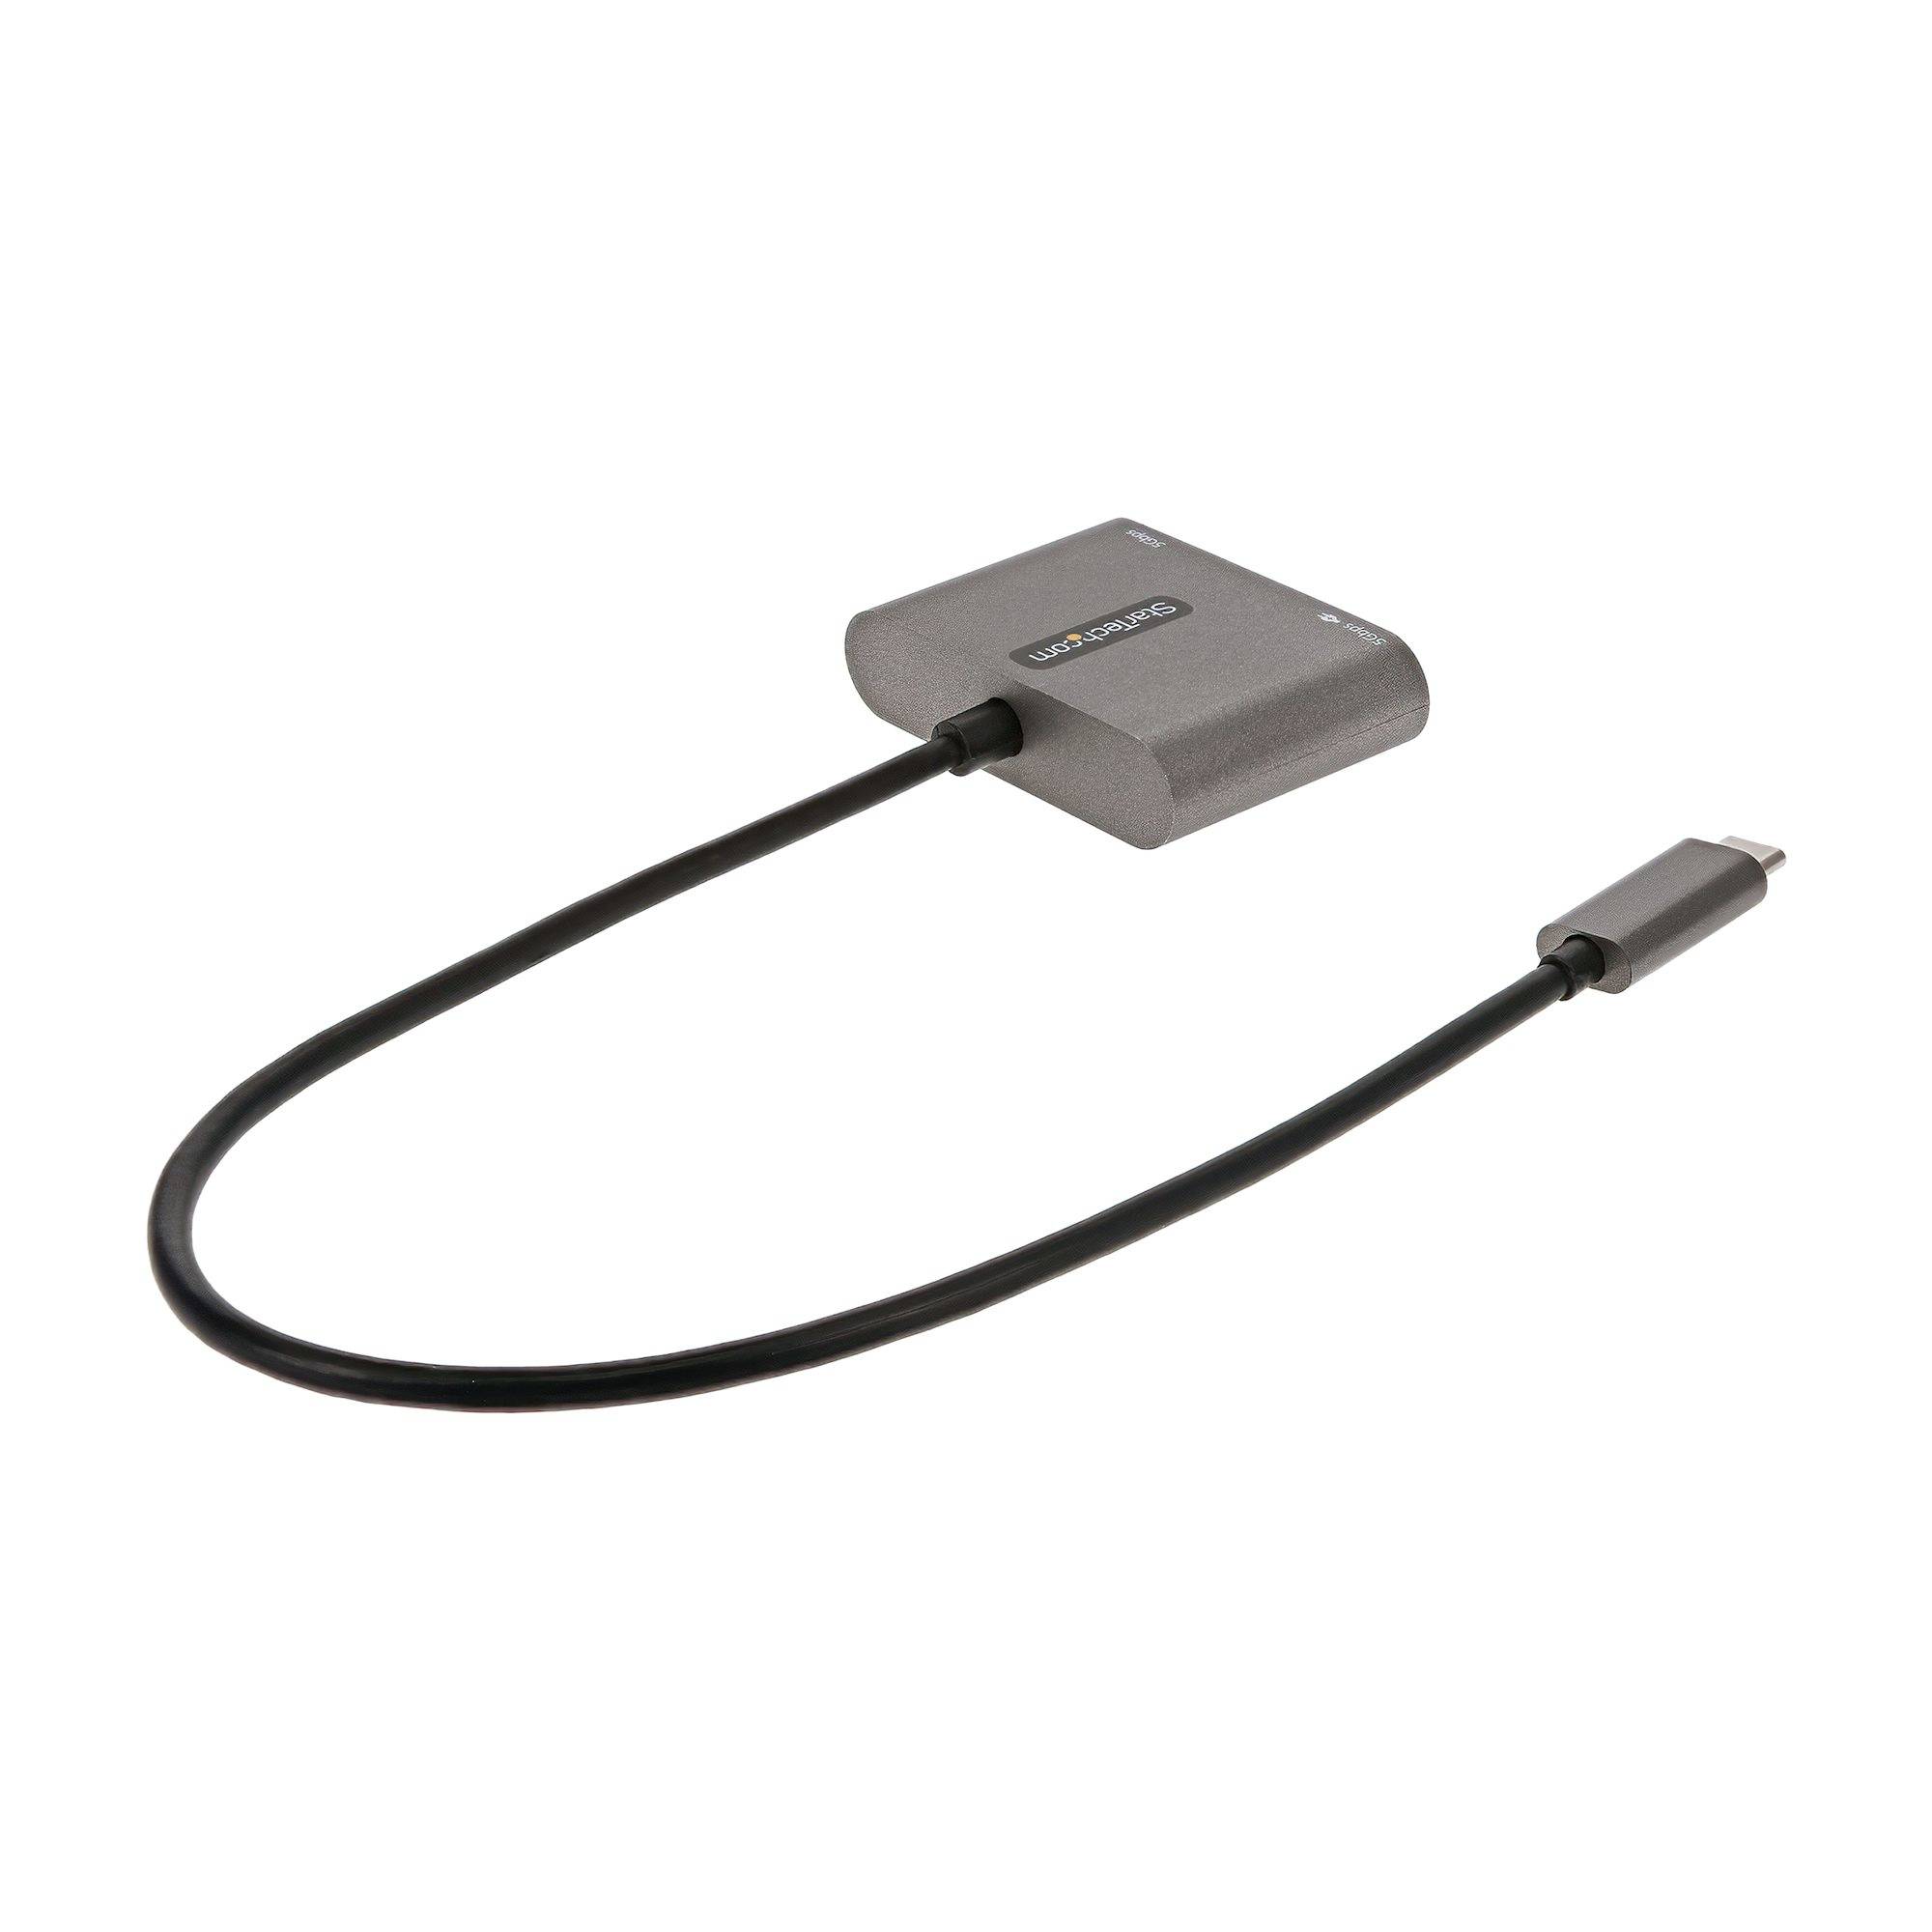 Rca Informatique - image du produit : USB C MULTIPORT ADAPTER USB-C TO HDMI 4K PD 3.0 USB 3.0 HUB